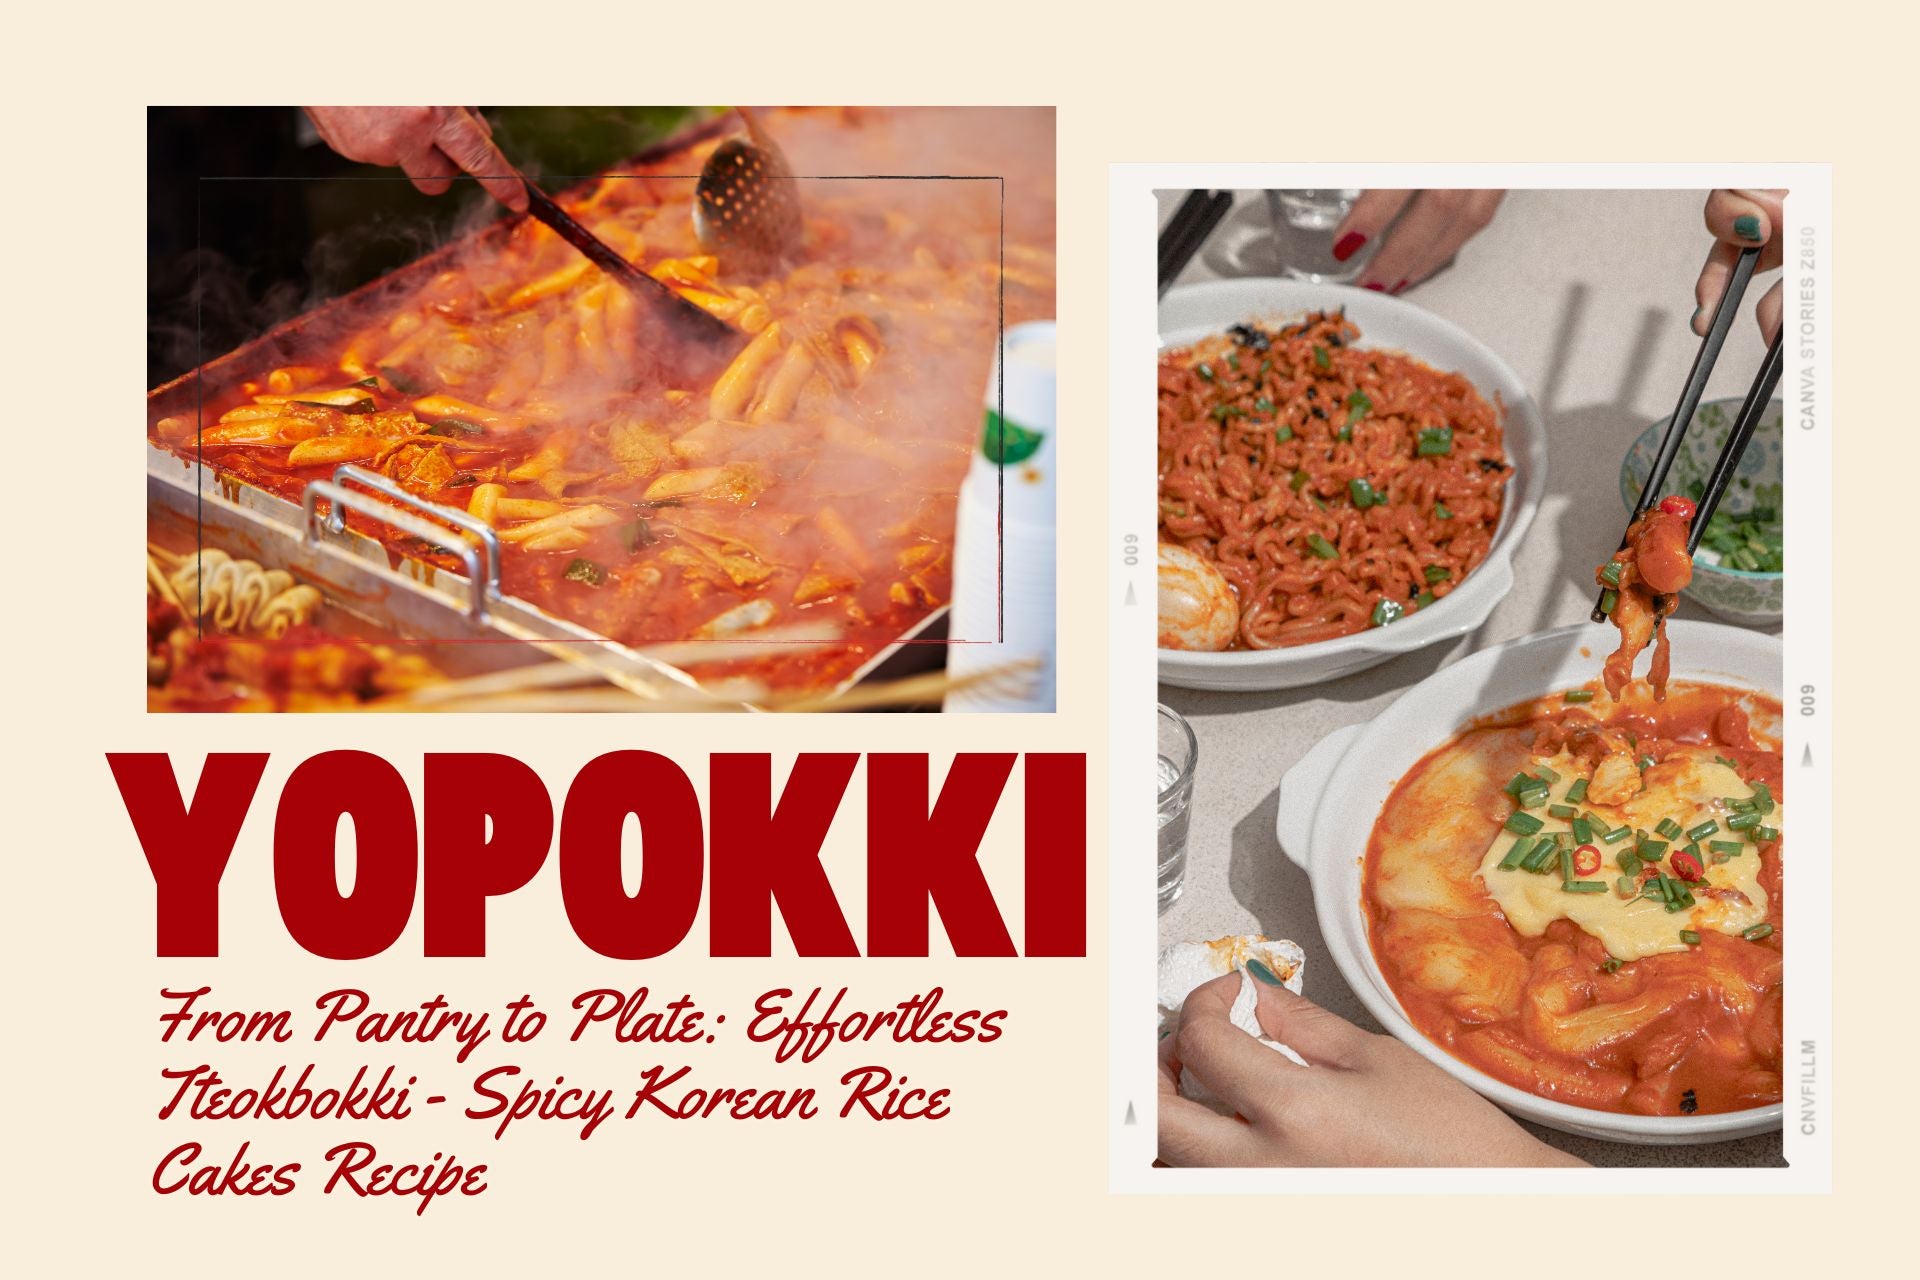 From Pantry to Plate: Effortless Tteokbokki - Spicy Korean Rice Cakes Recipe-yopokki